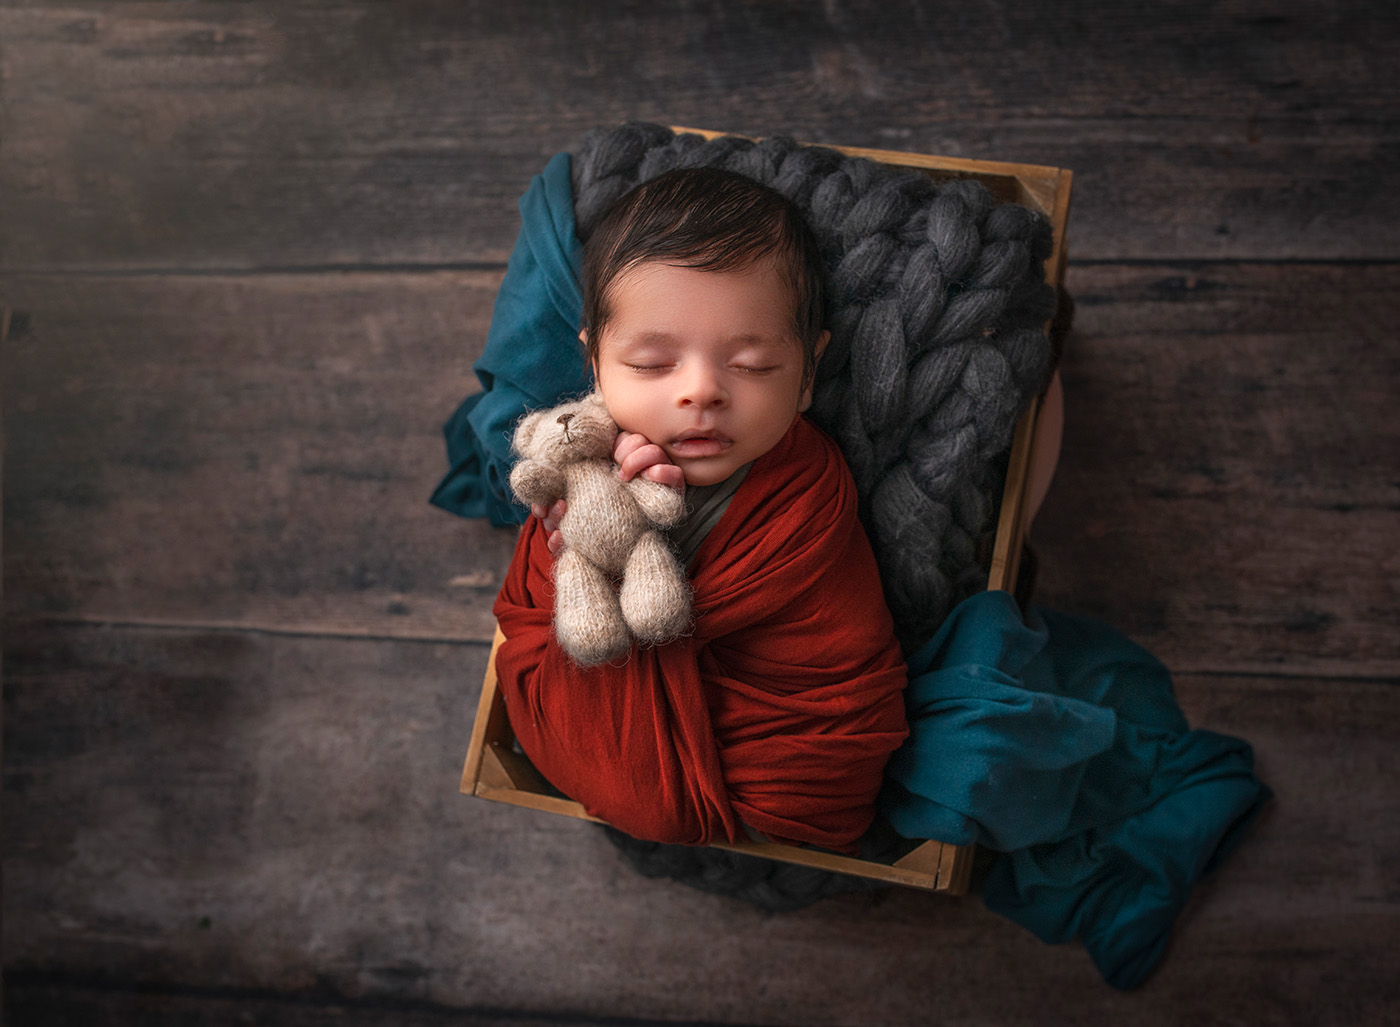 newborn baby sleeping in a crate holding a teddy bear